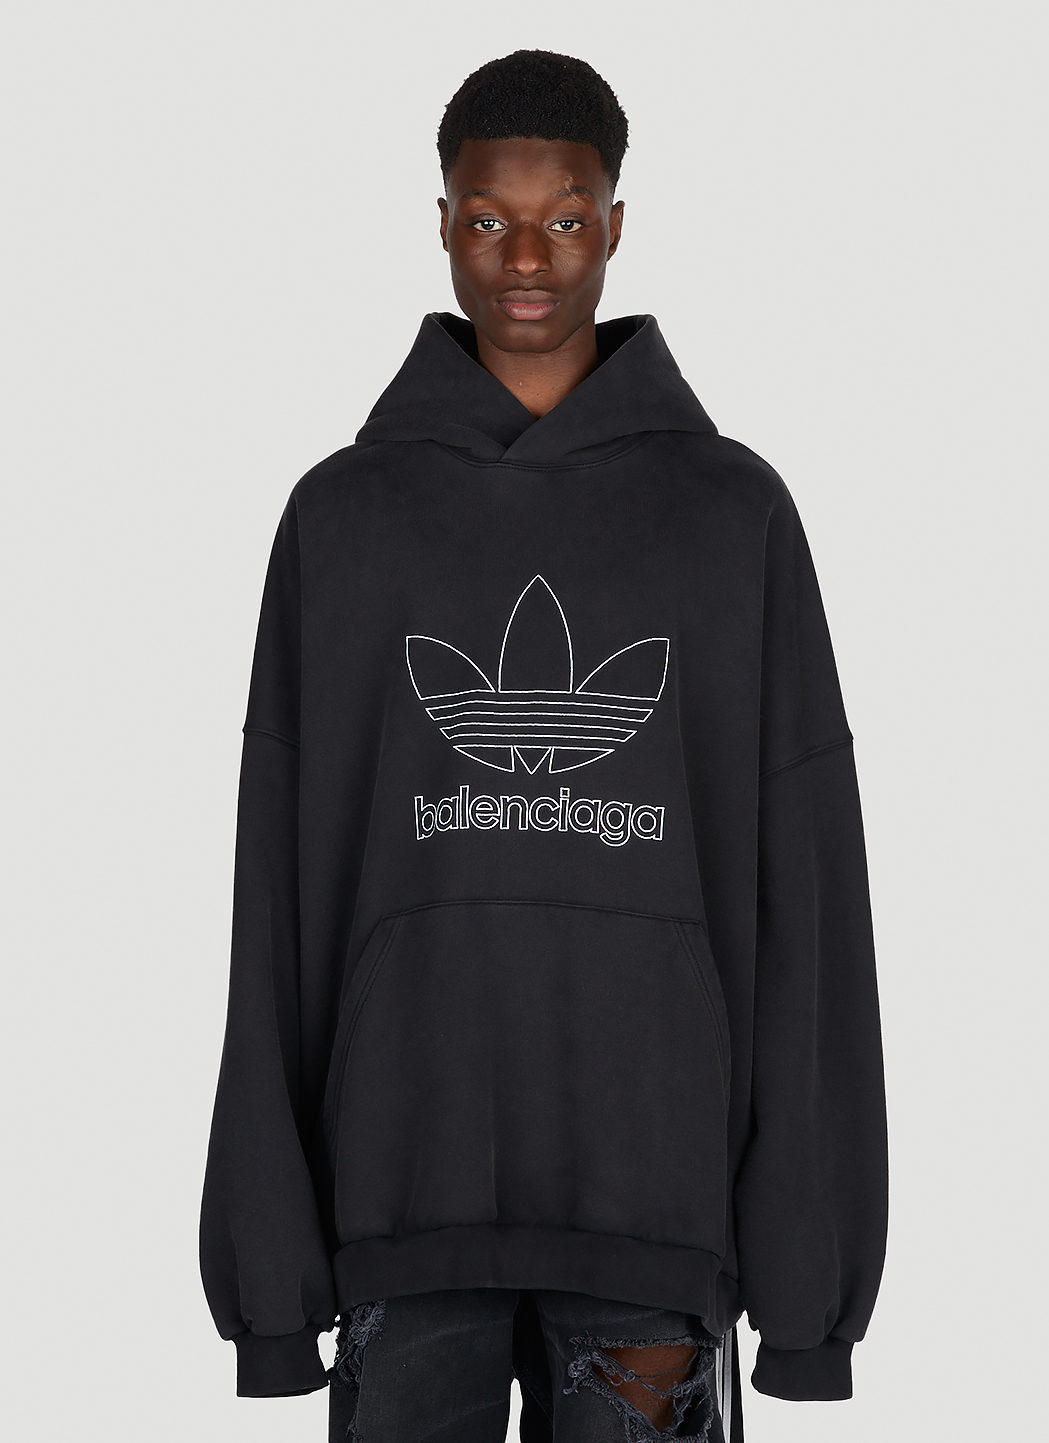 Logo in | adidas Balenciaga Embroidered Black Sweatshirt Hooded x LN-CC®